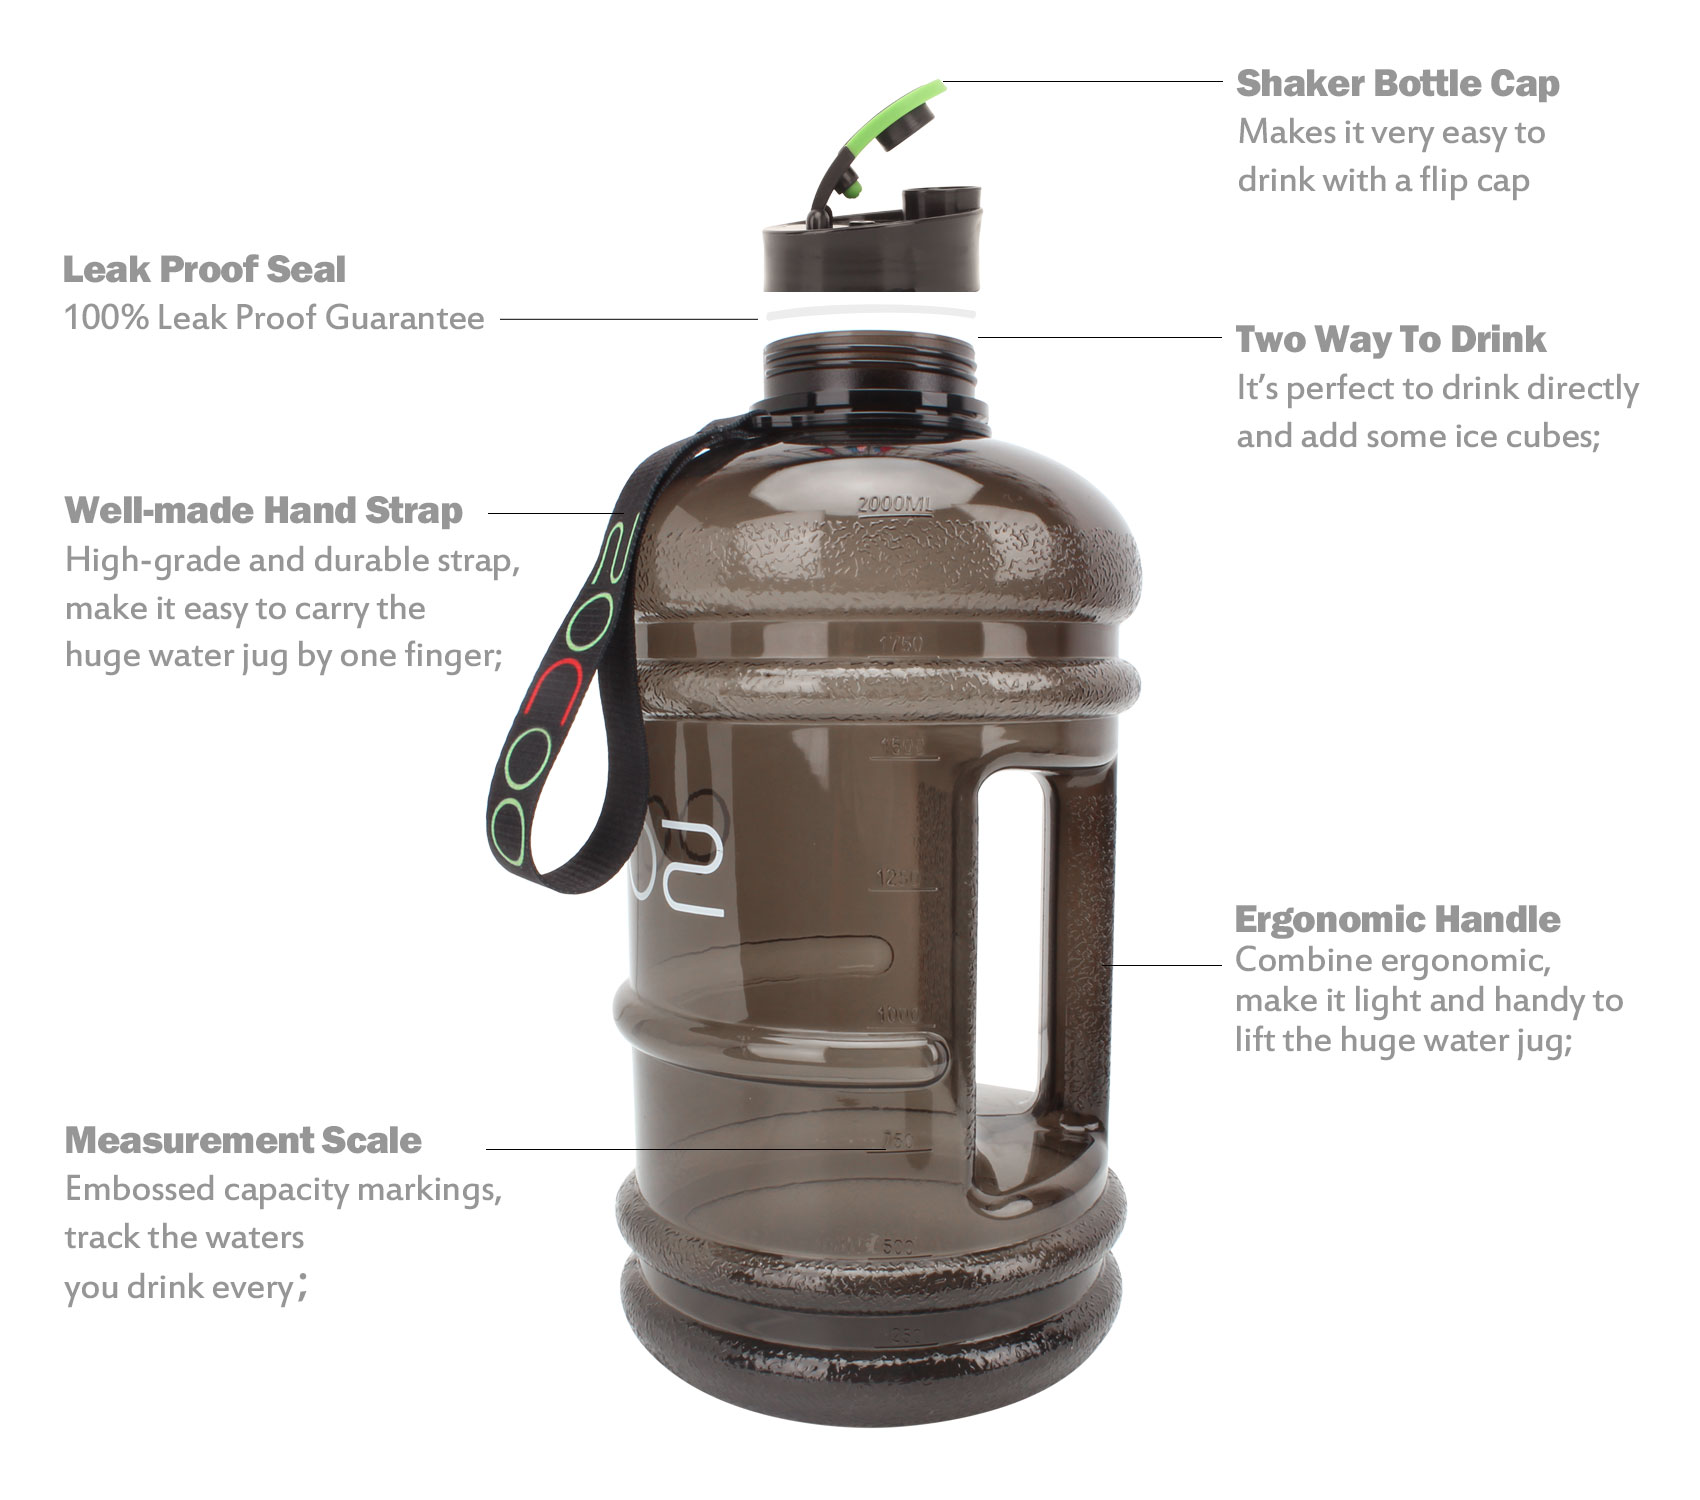 2.2l large capacity water bottle shaker